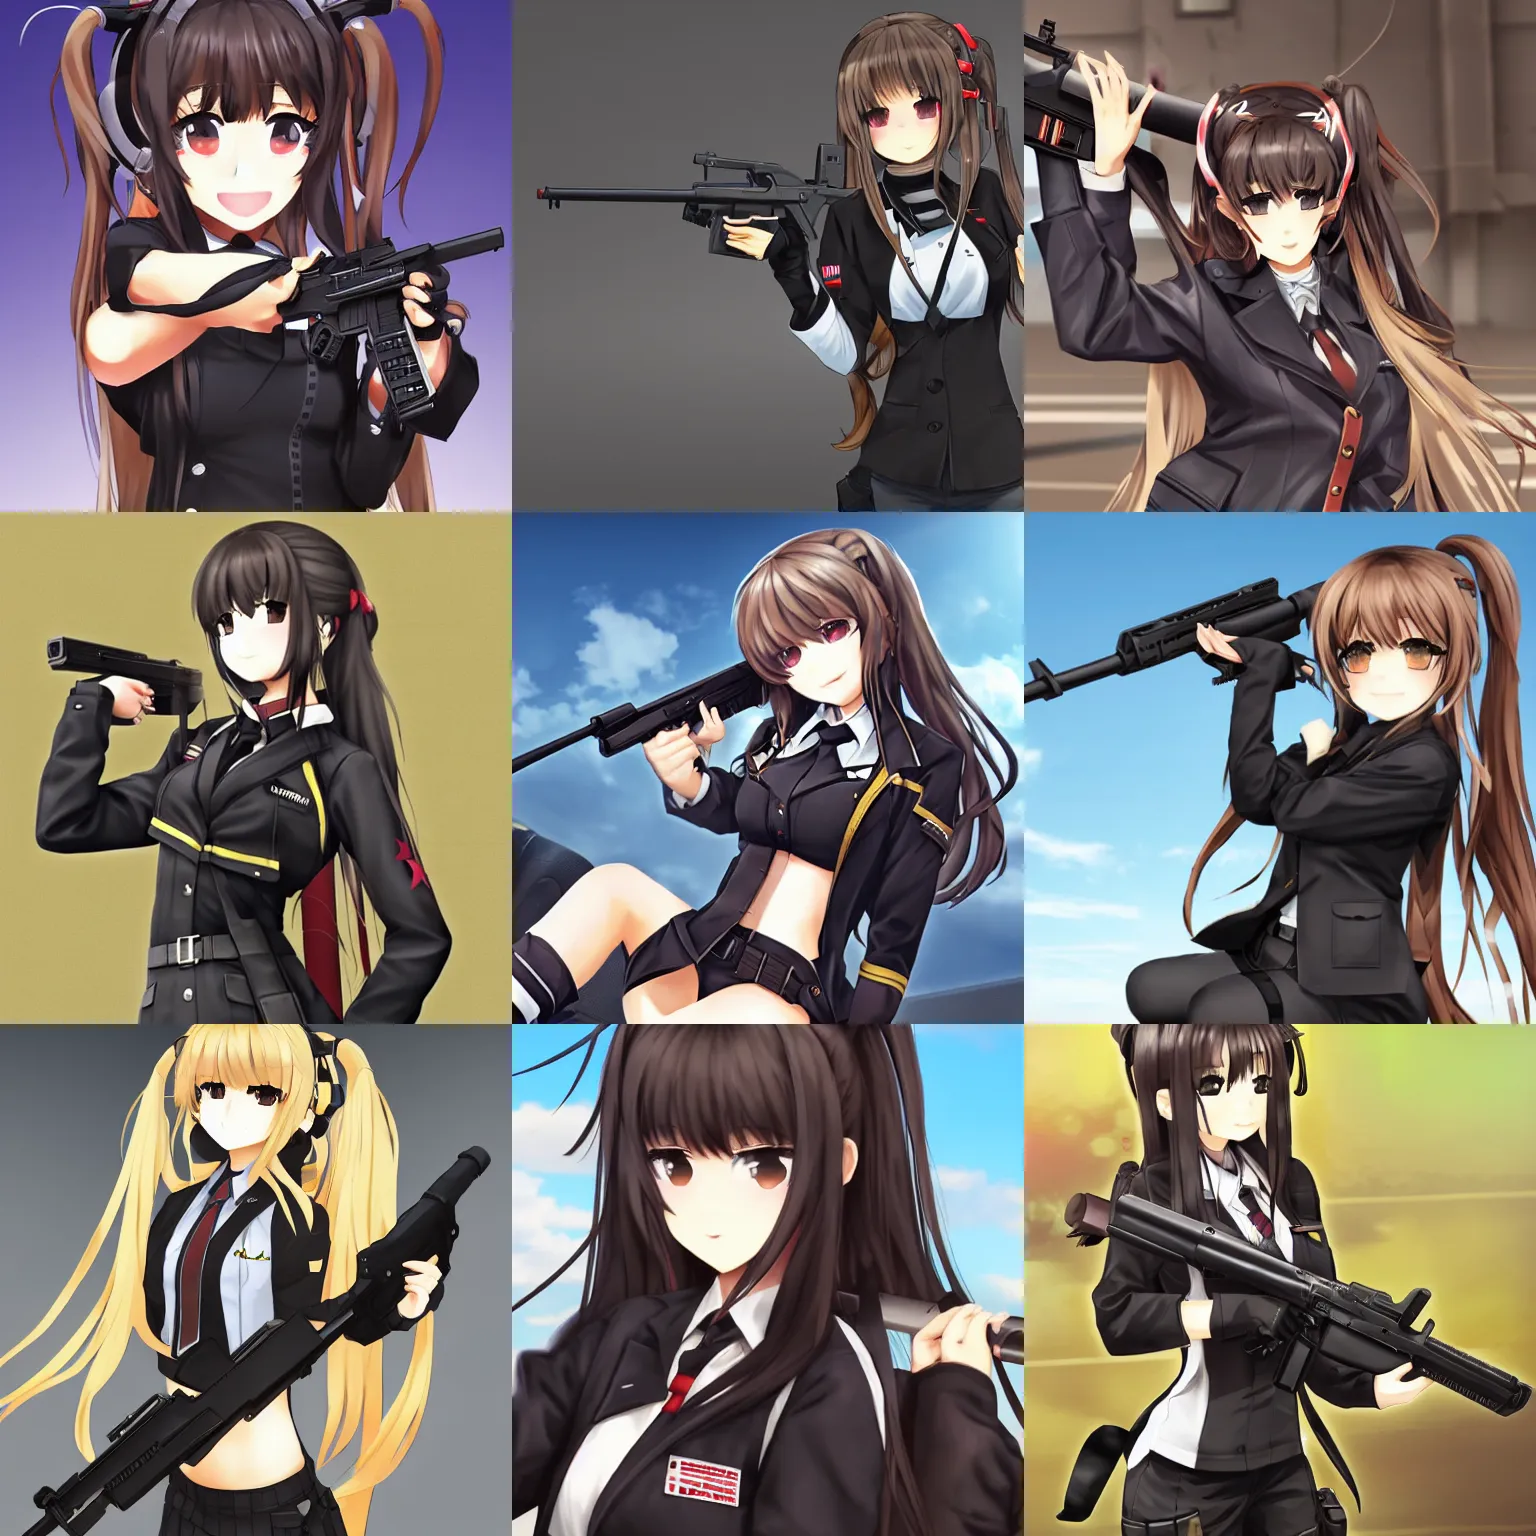 Prompt: girls'frontline character ump 9, holding gun ump 9